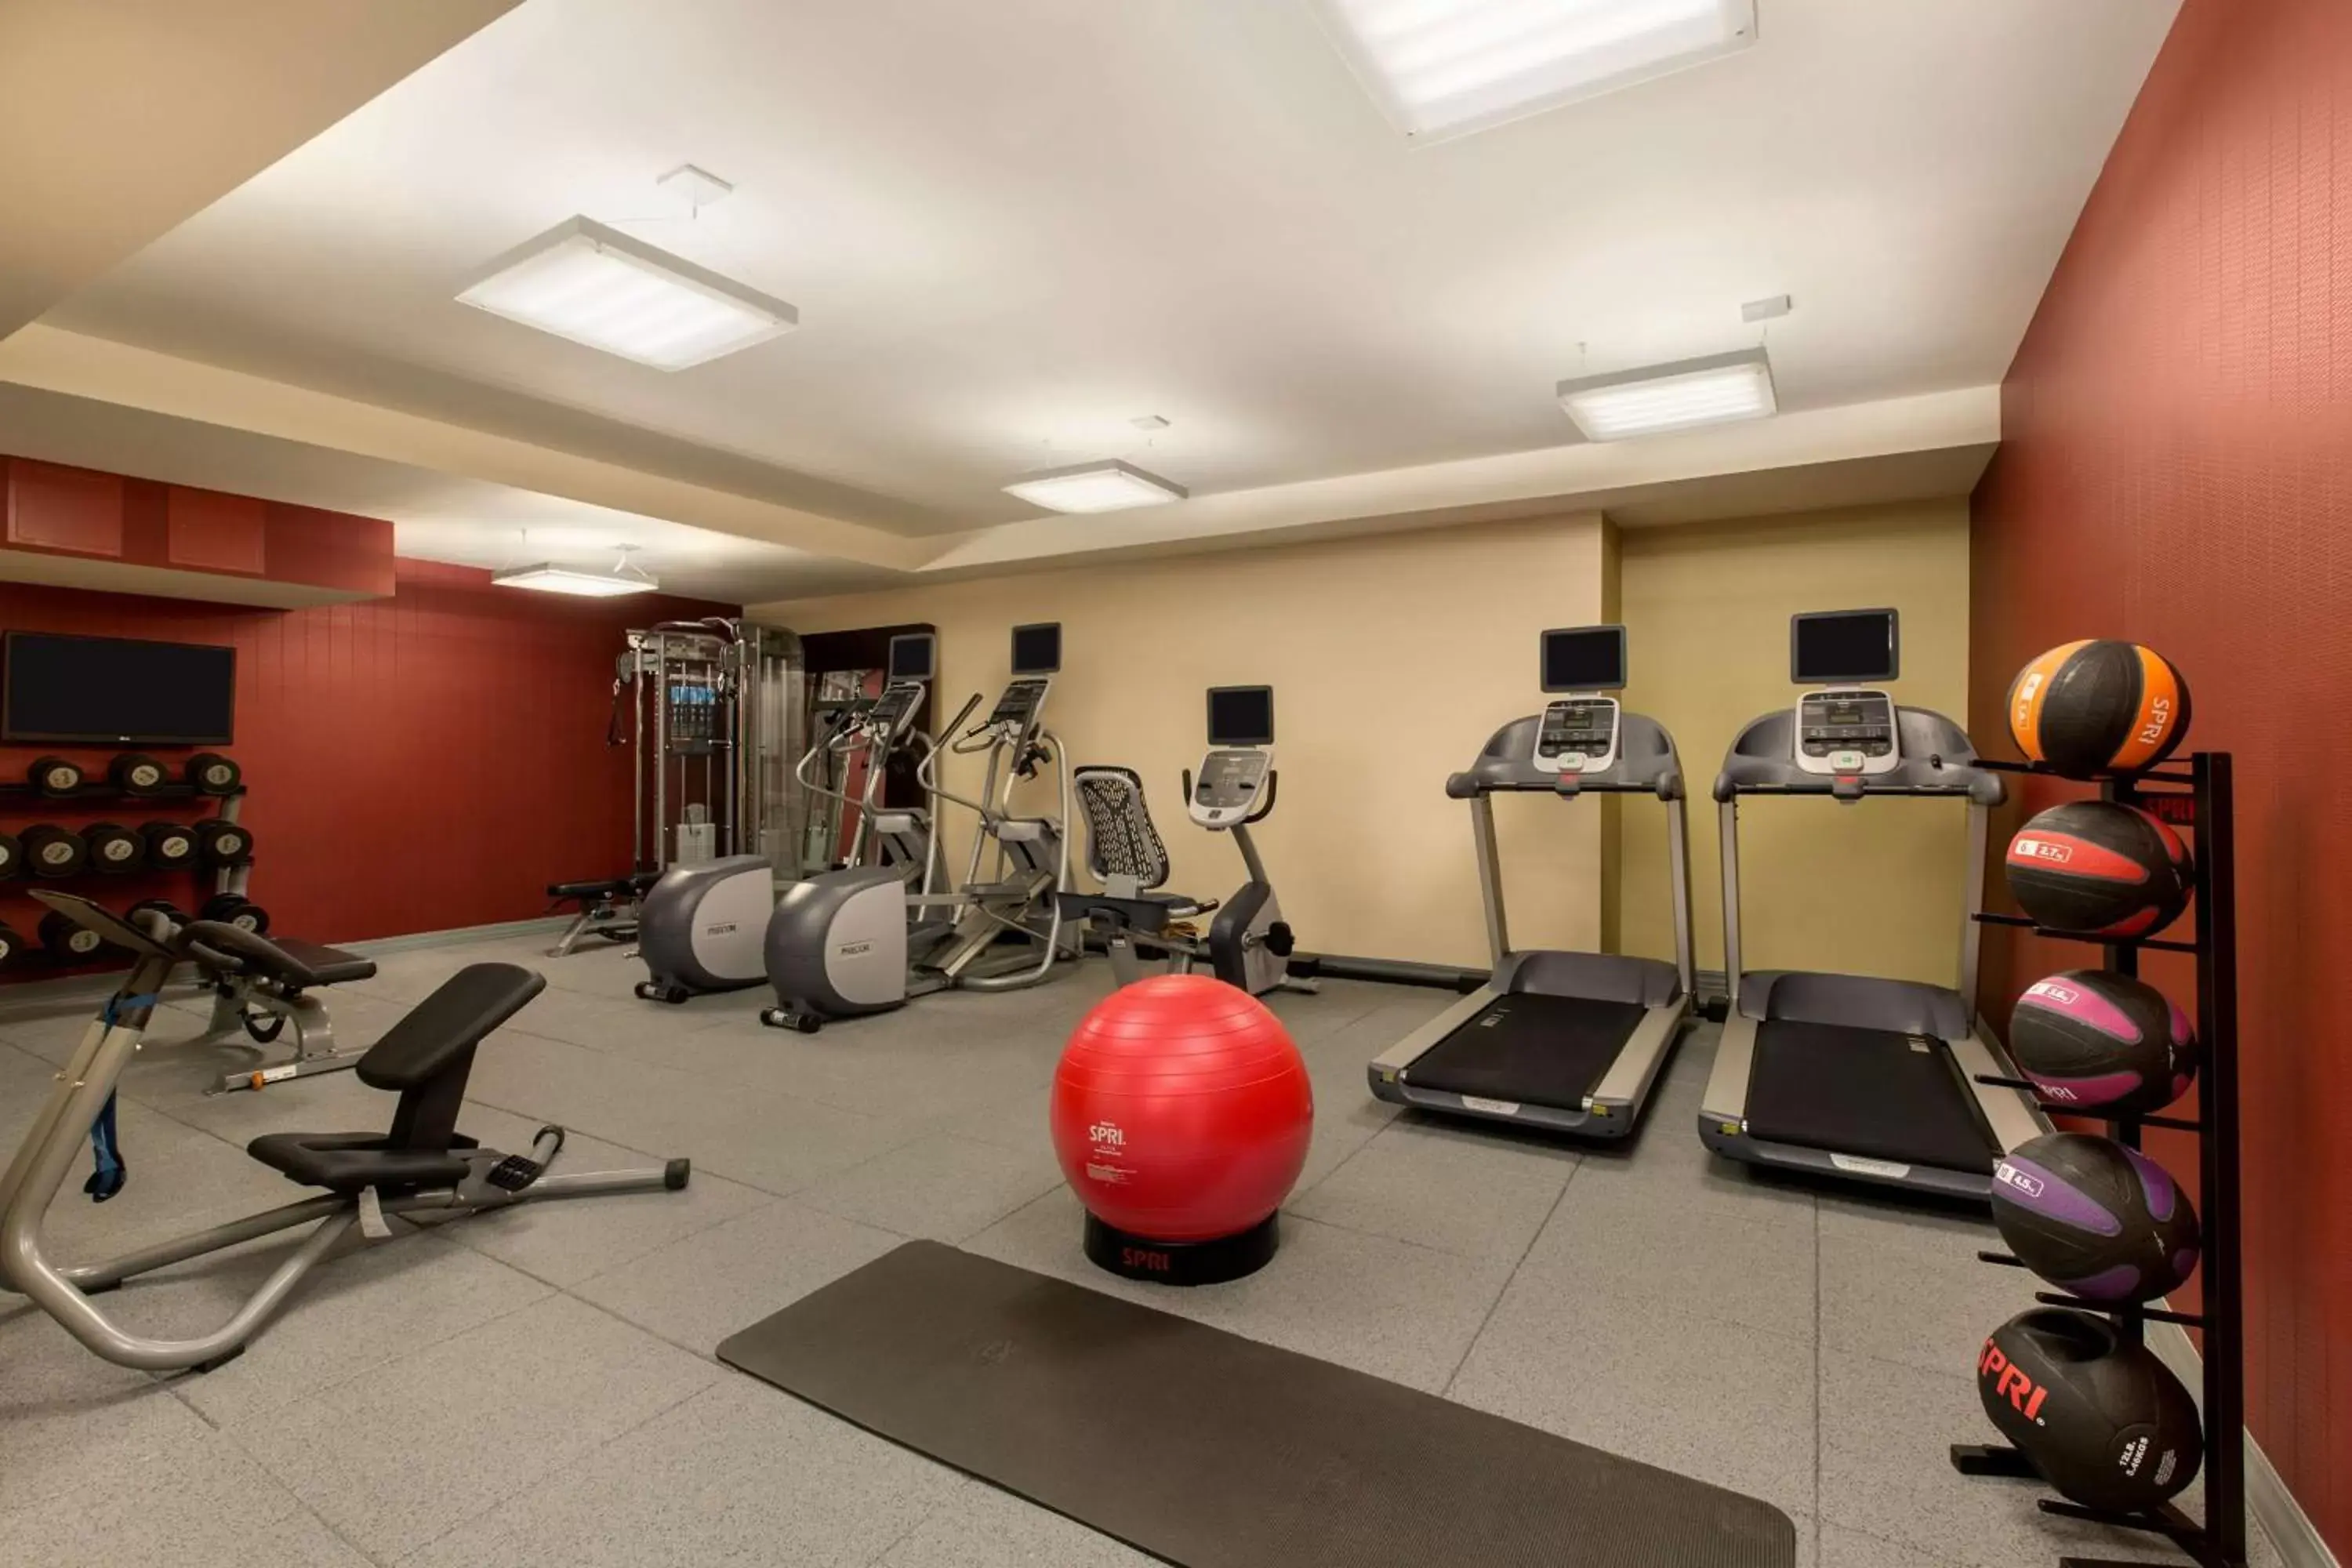 Fitness centre/facilities, Fitness Center/Facilities in Hilton Garden Inn New York Manhattan Midtown East